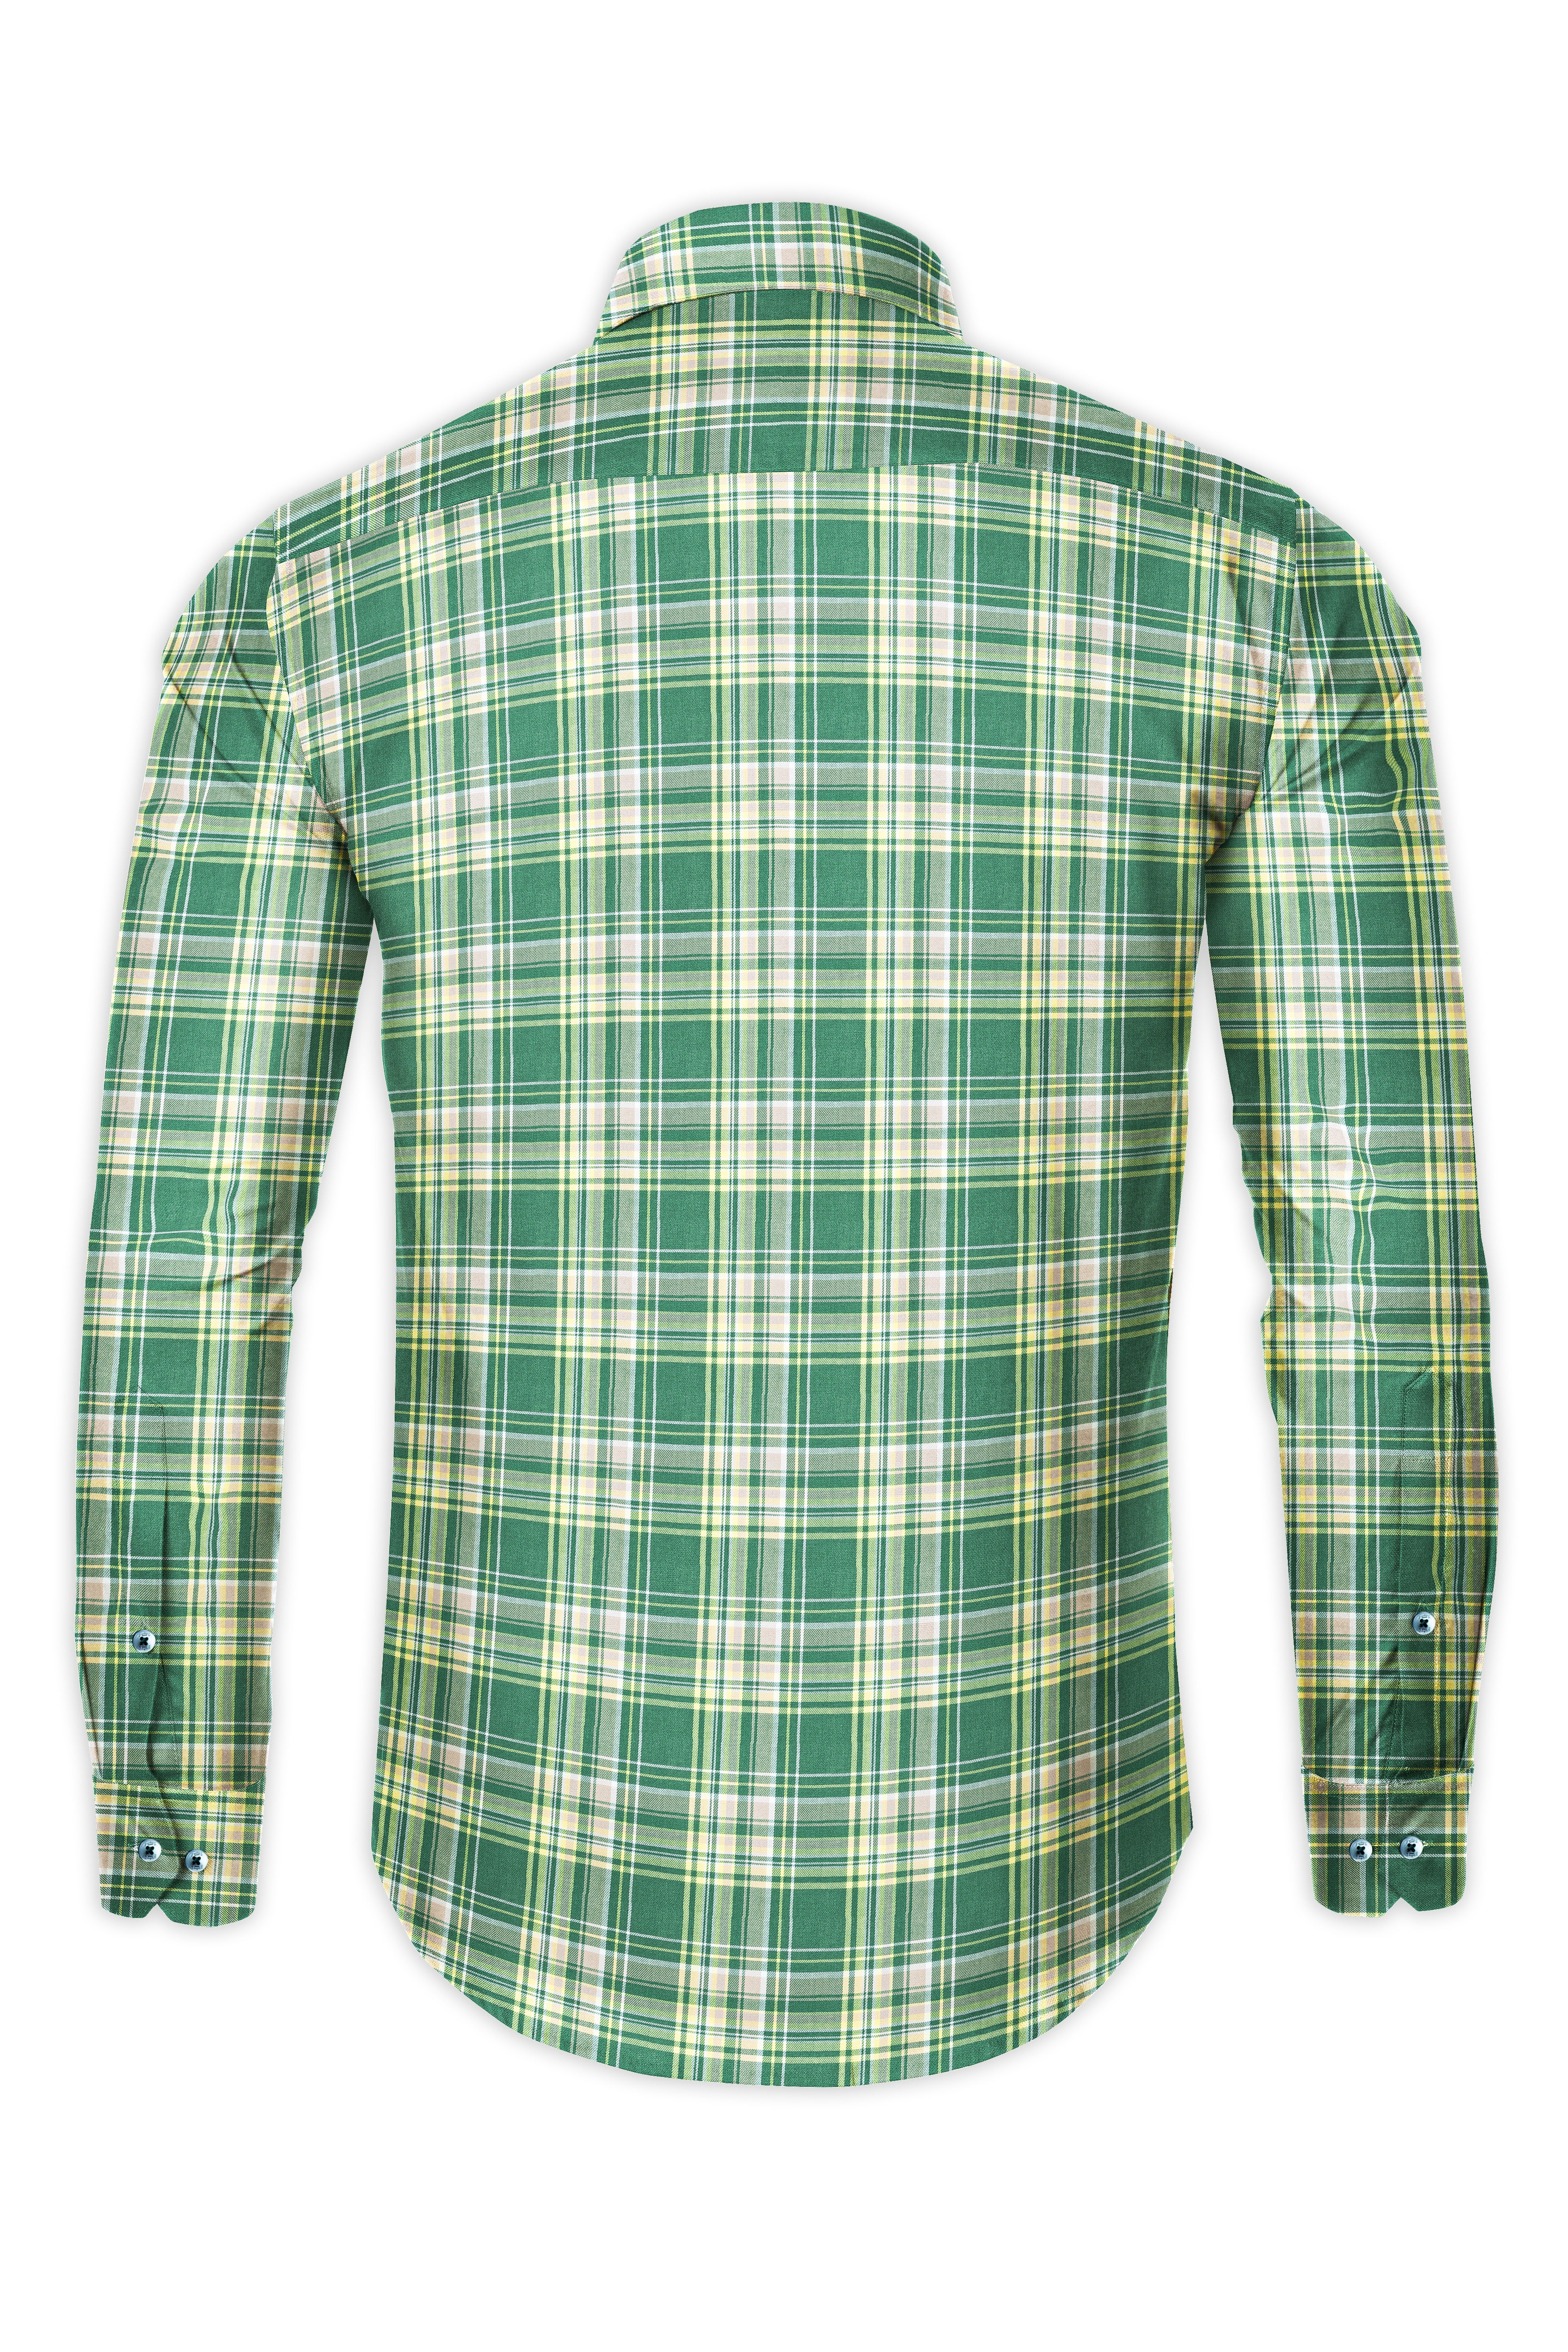 Viridian Green with Cloud Gray Plaid super Soft Premium Cotton Shirt